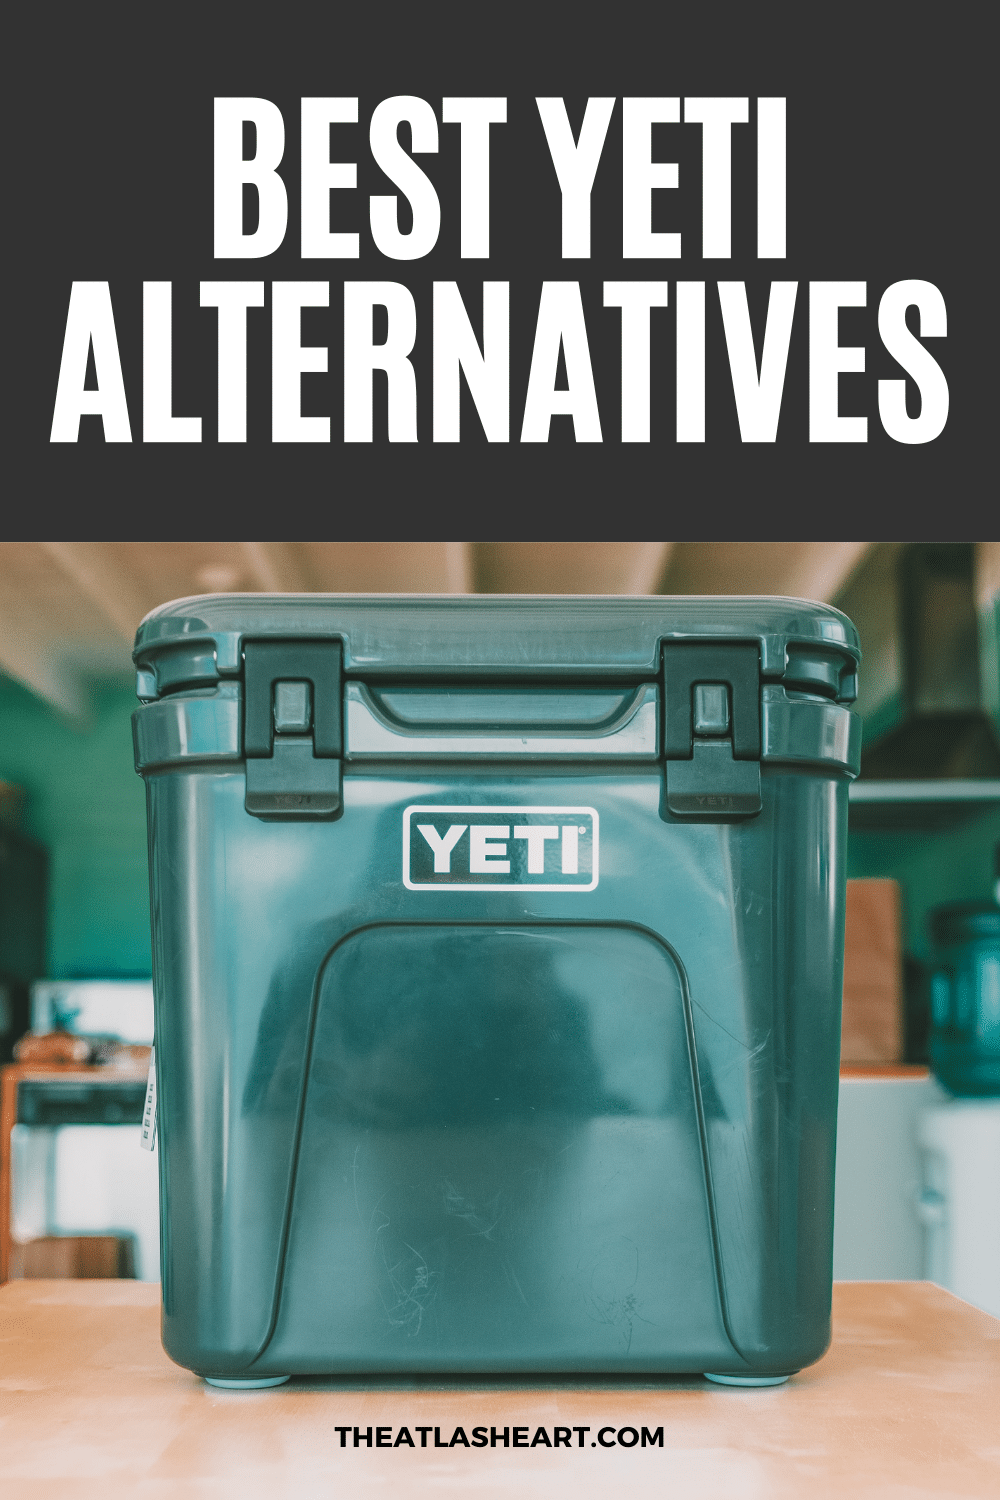 Best Yeti Alternatives: 12 Best Alternatives to Yeti Coolers in 2023